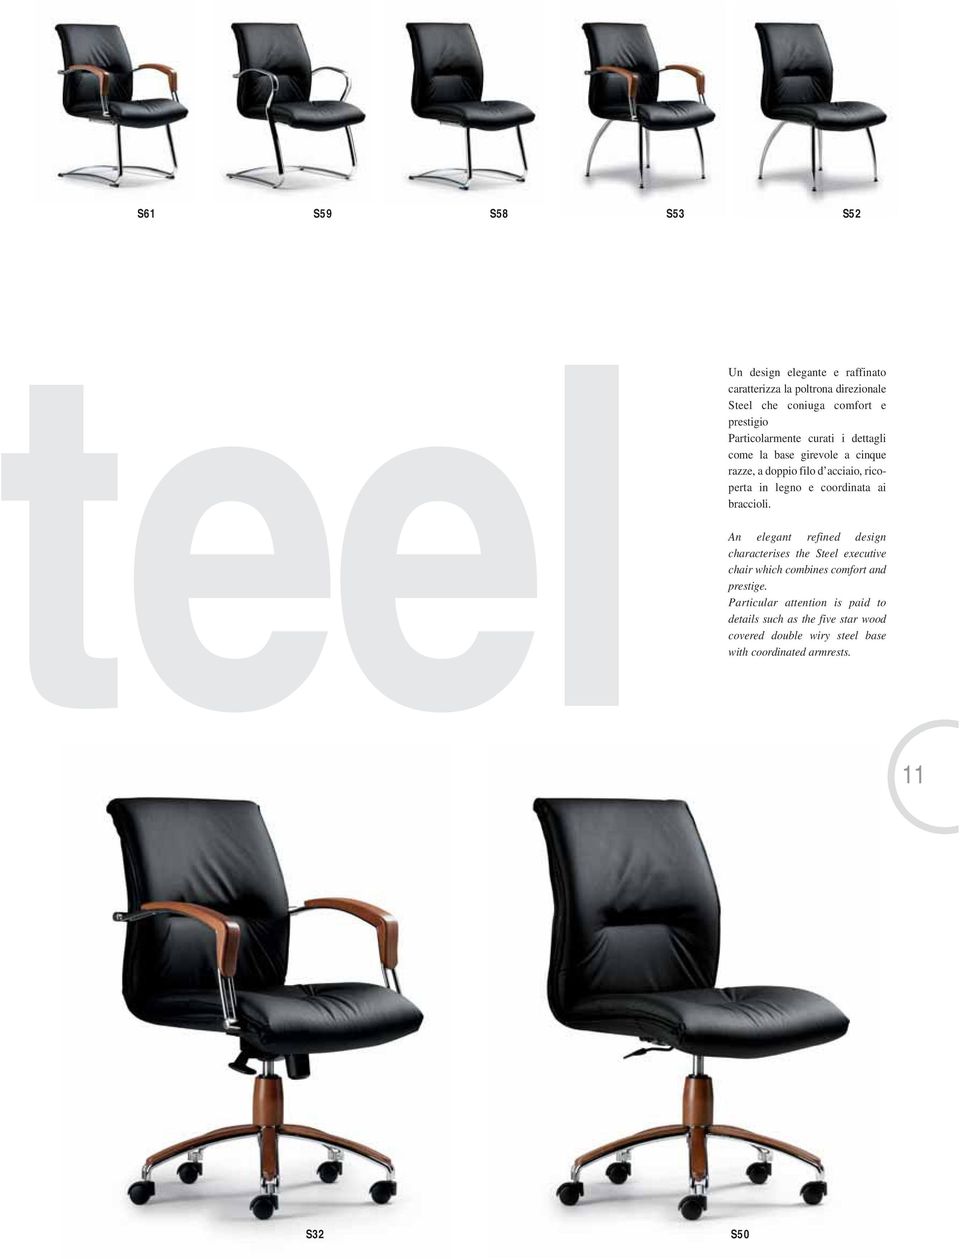 coordinata ai braccioli. An elegant refined design characterises the Steel executive chair which combines comfort and prestige.